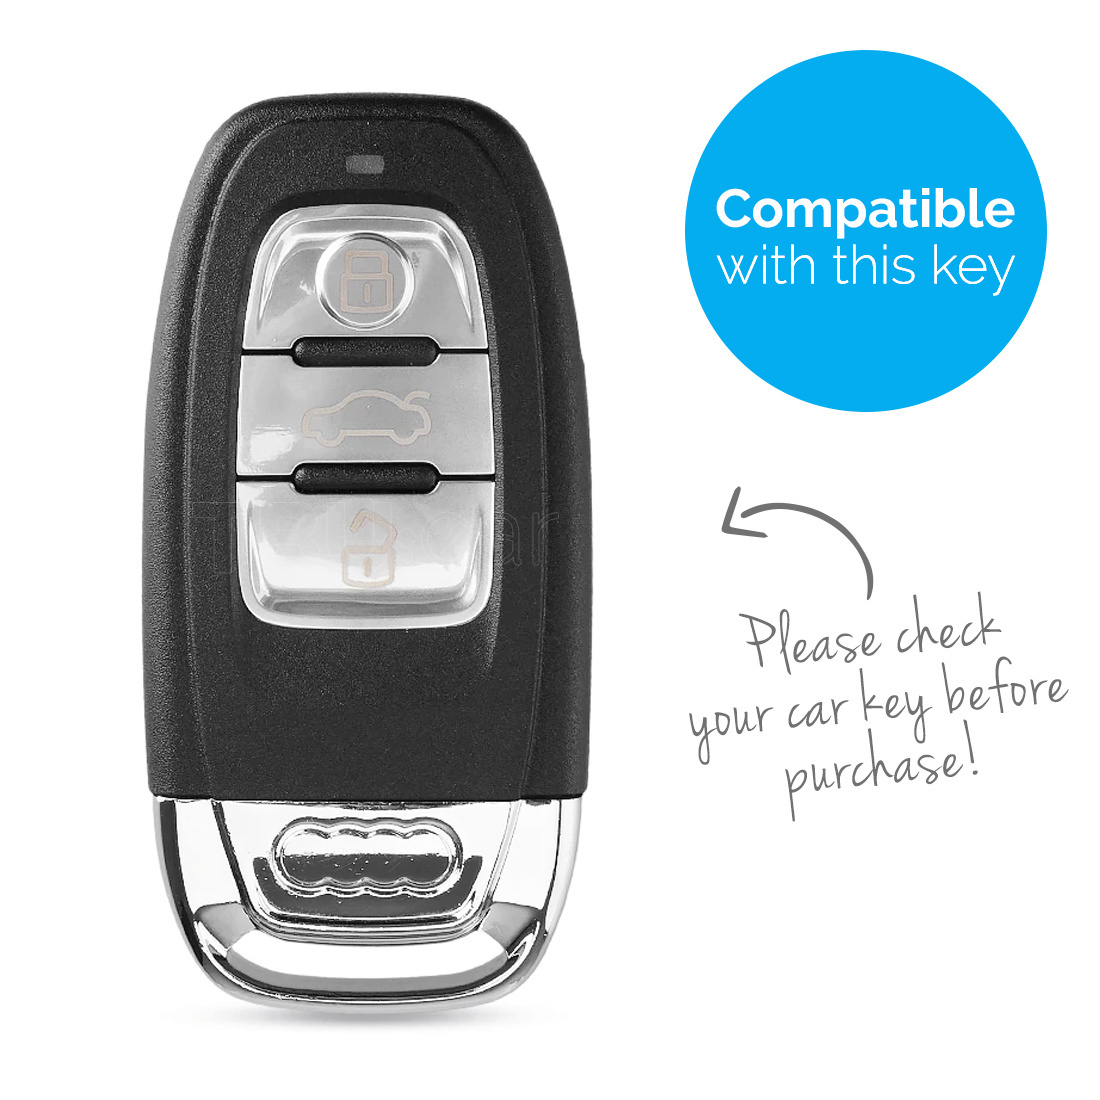 TBU car Autoschlüssel Hülle kompatibel mit Audi 3 Tasten (Keyless Entry) -  Schutzhülle aus Silikon - Auto Schlüsselhülle Cover in Weiß